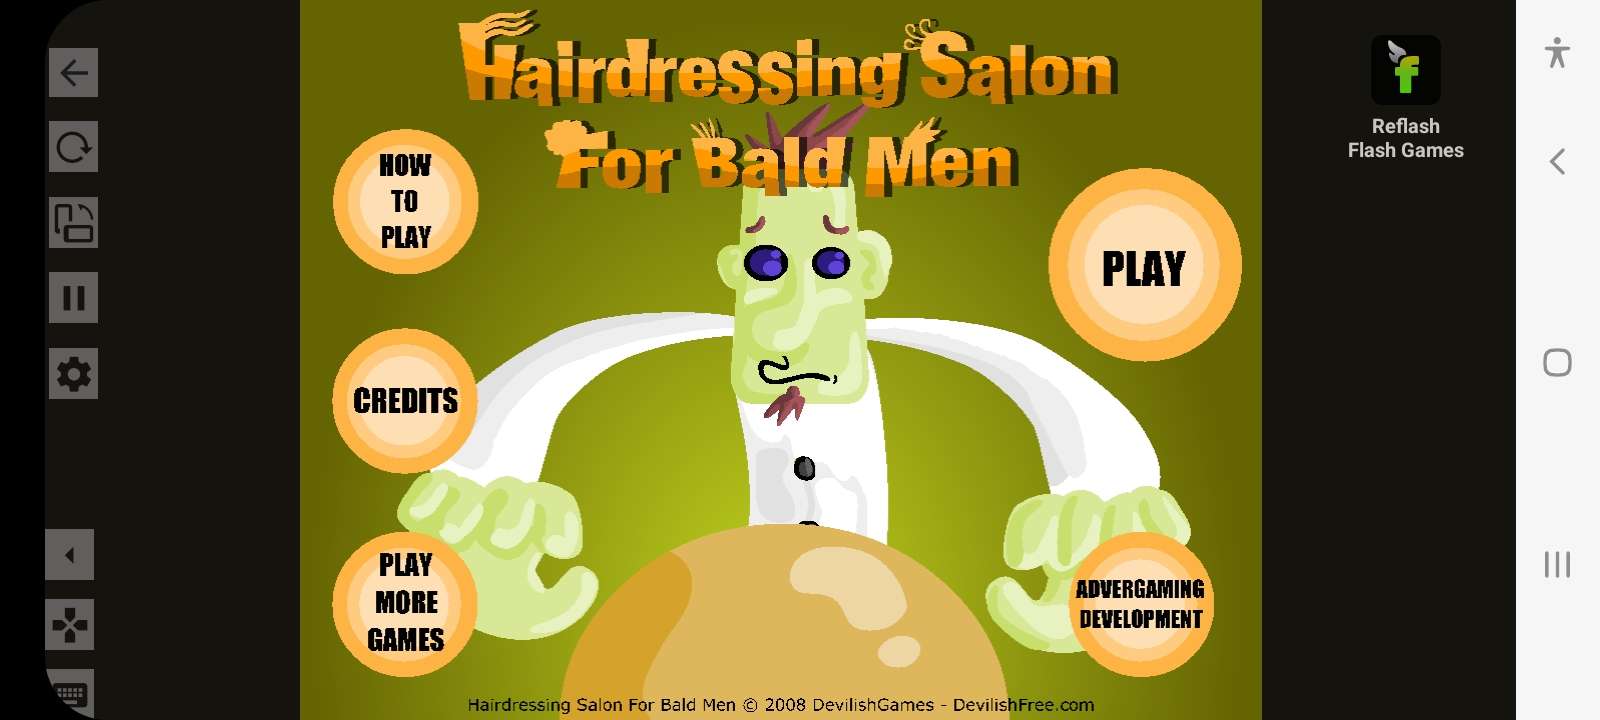 Hairdressing Salon for Bald Men jigsaw puzzle online